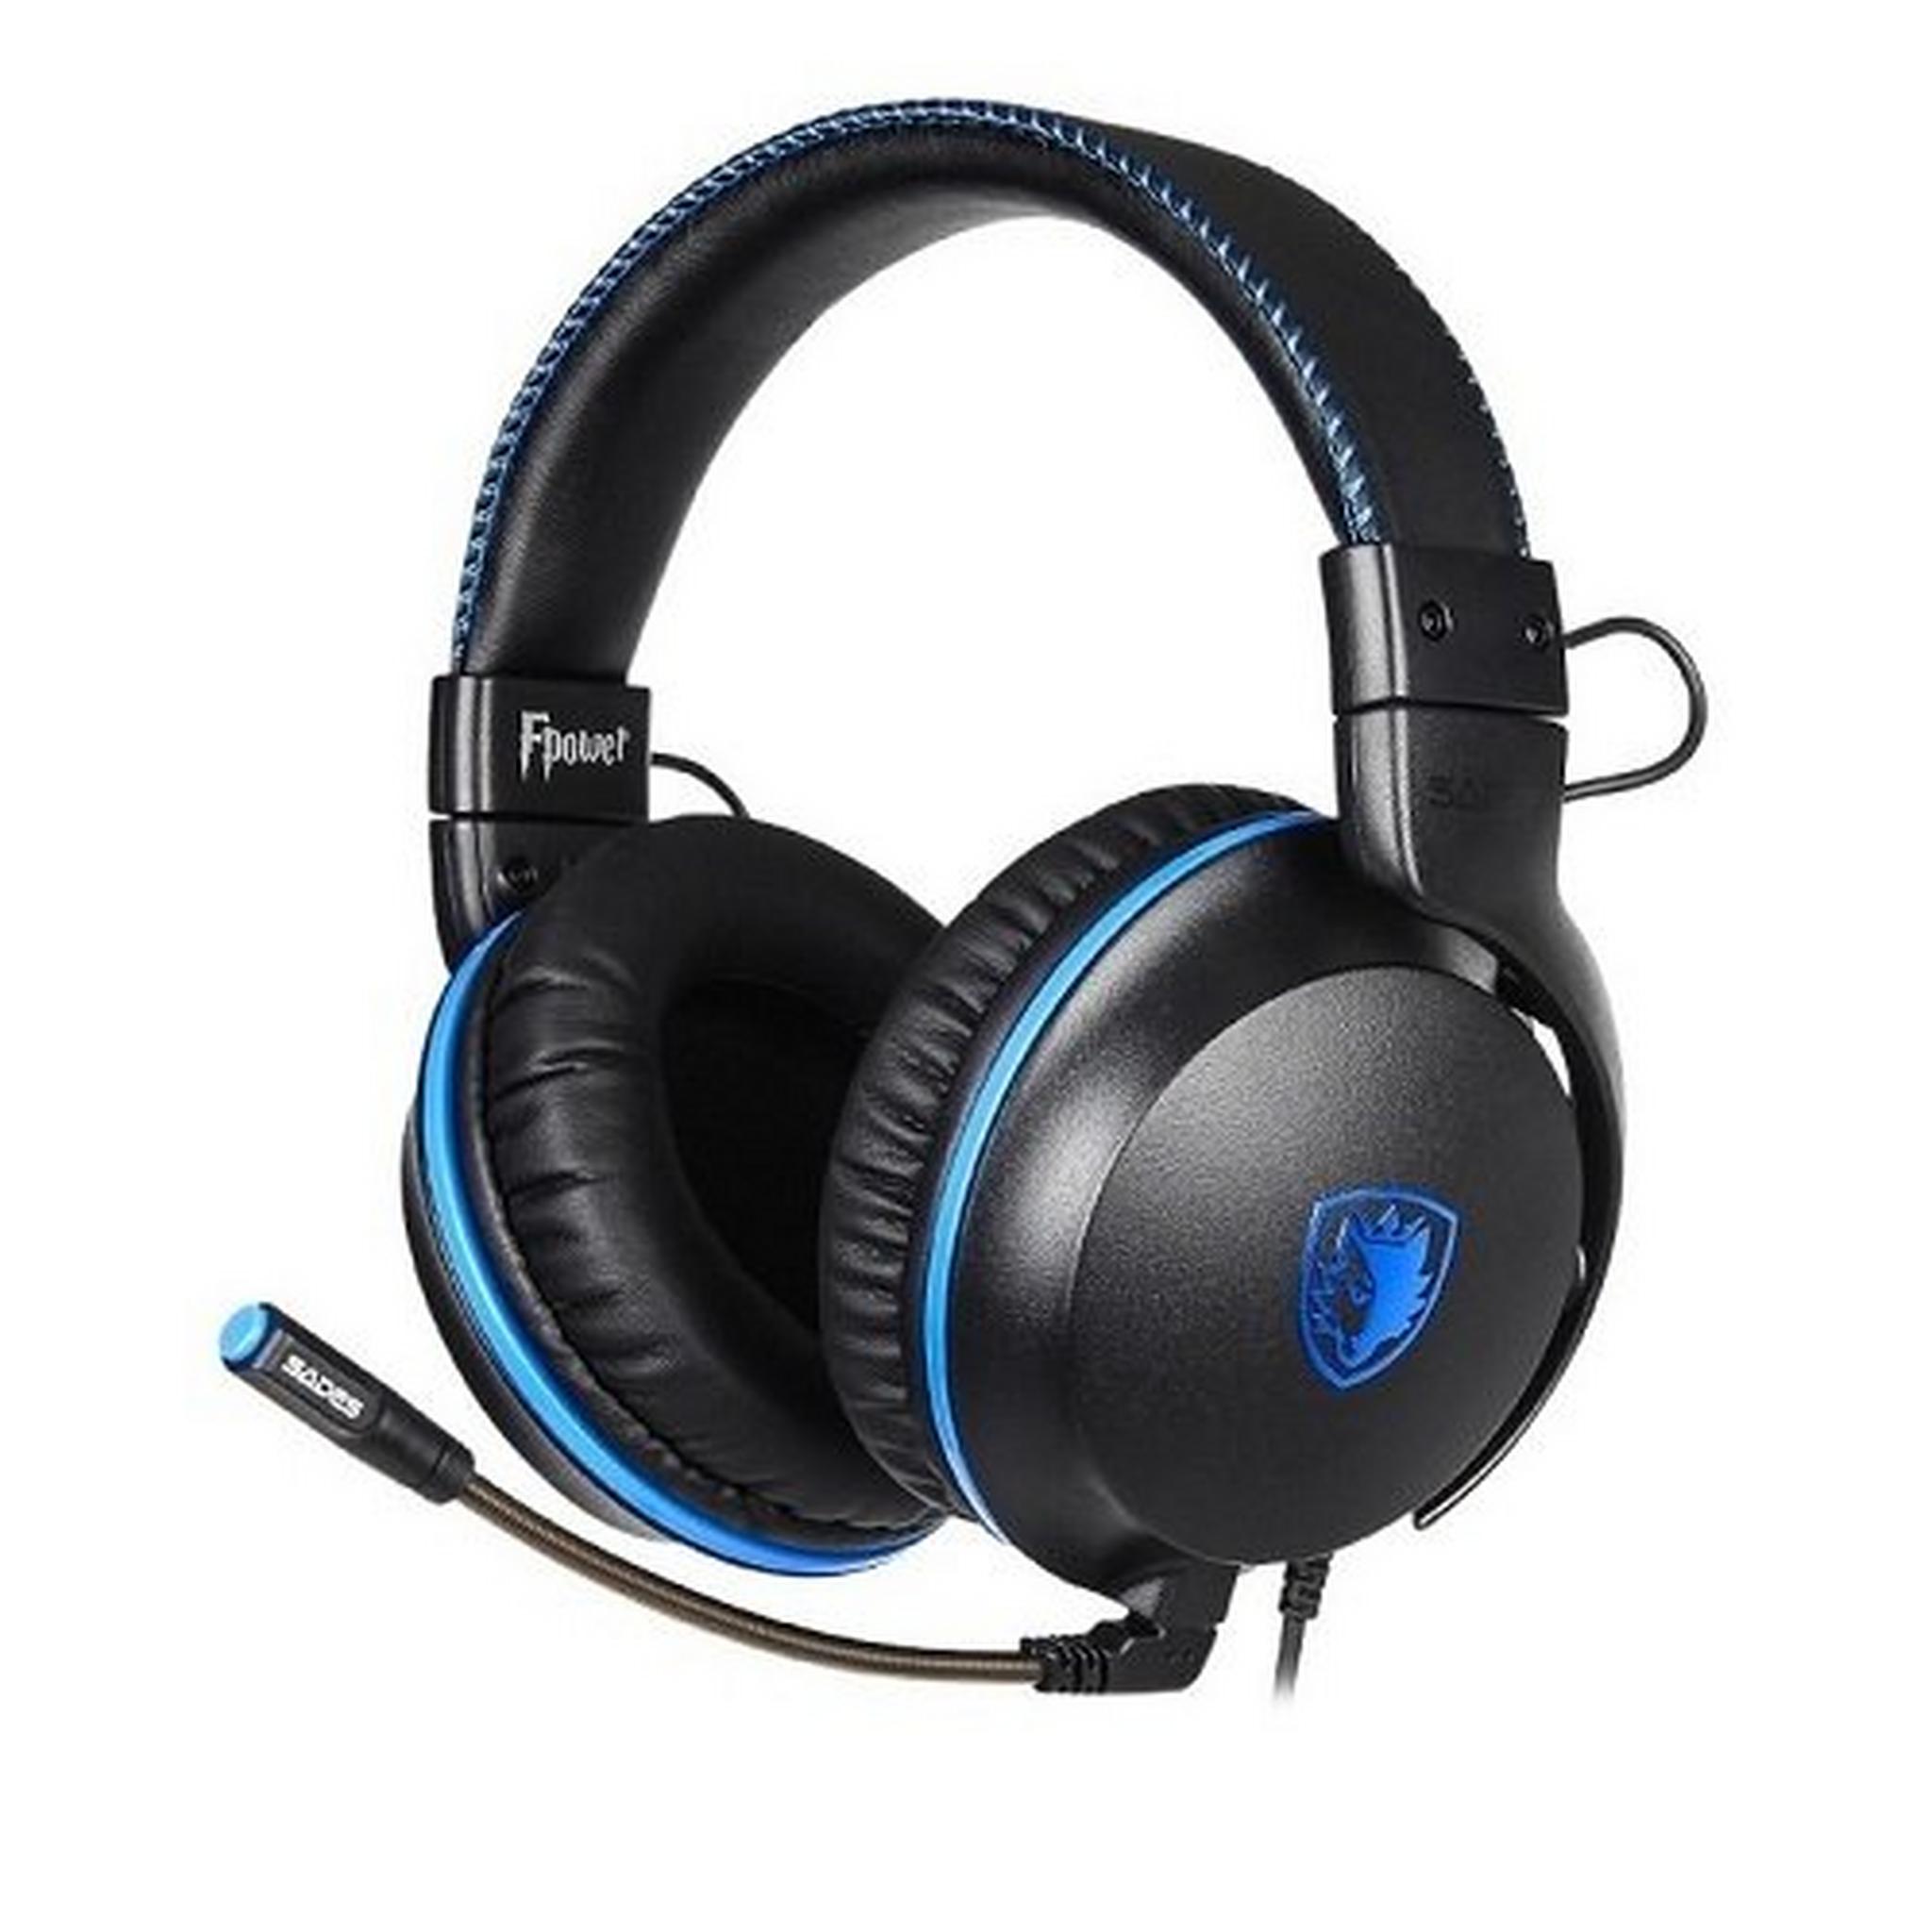 Sades F-Power Wired Gamind Headset - Black/Blue (SA-717)